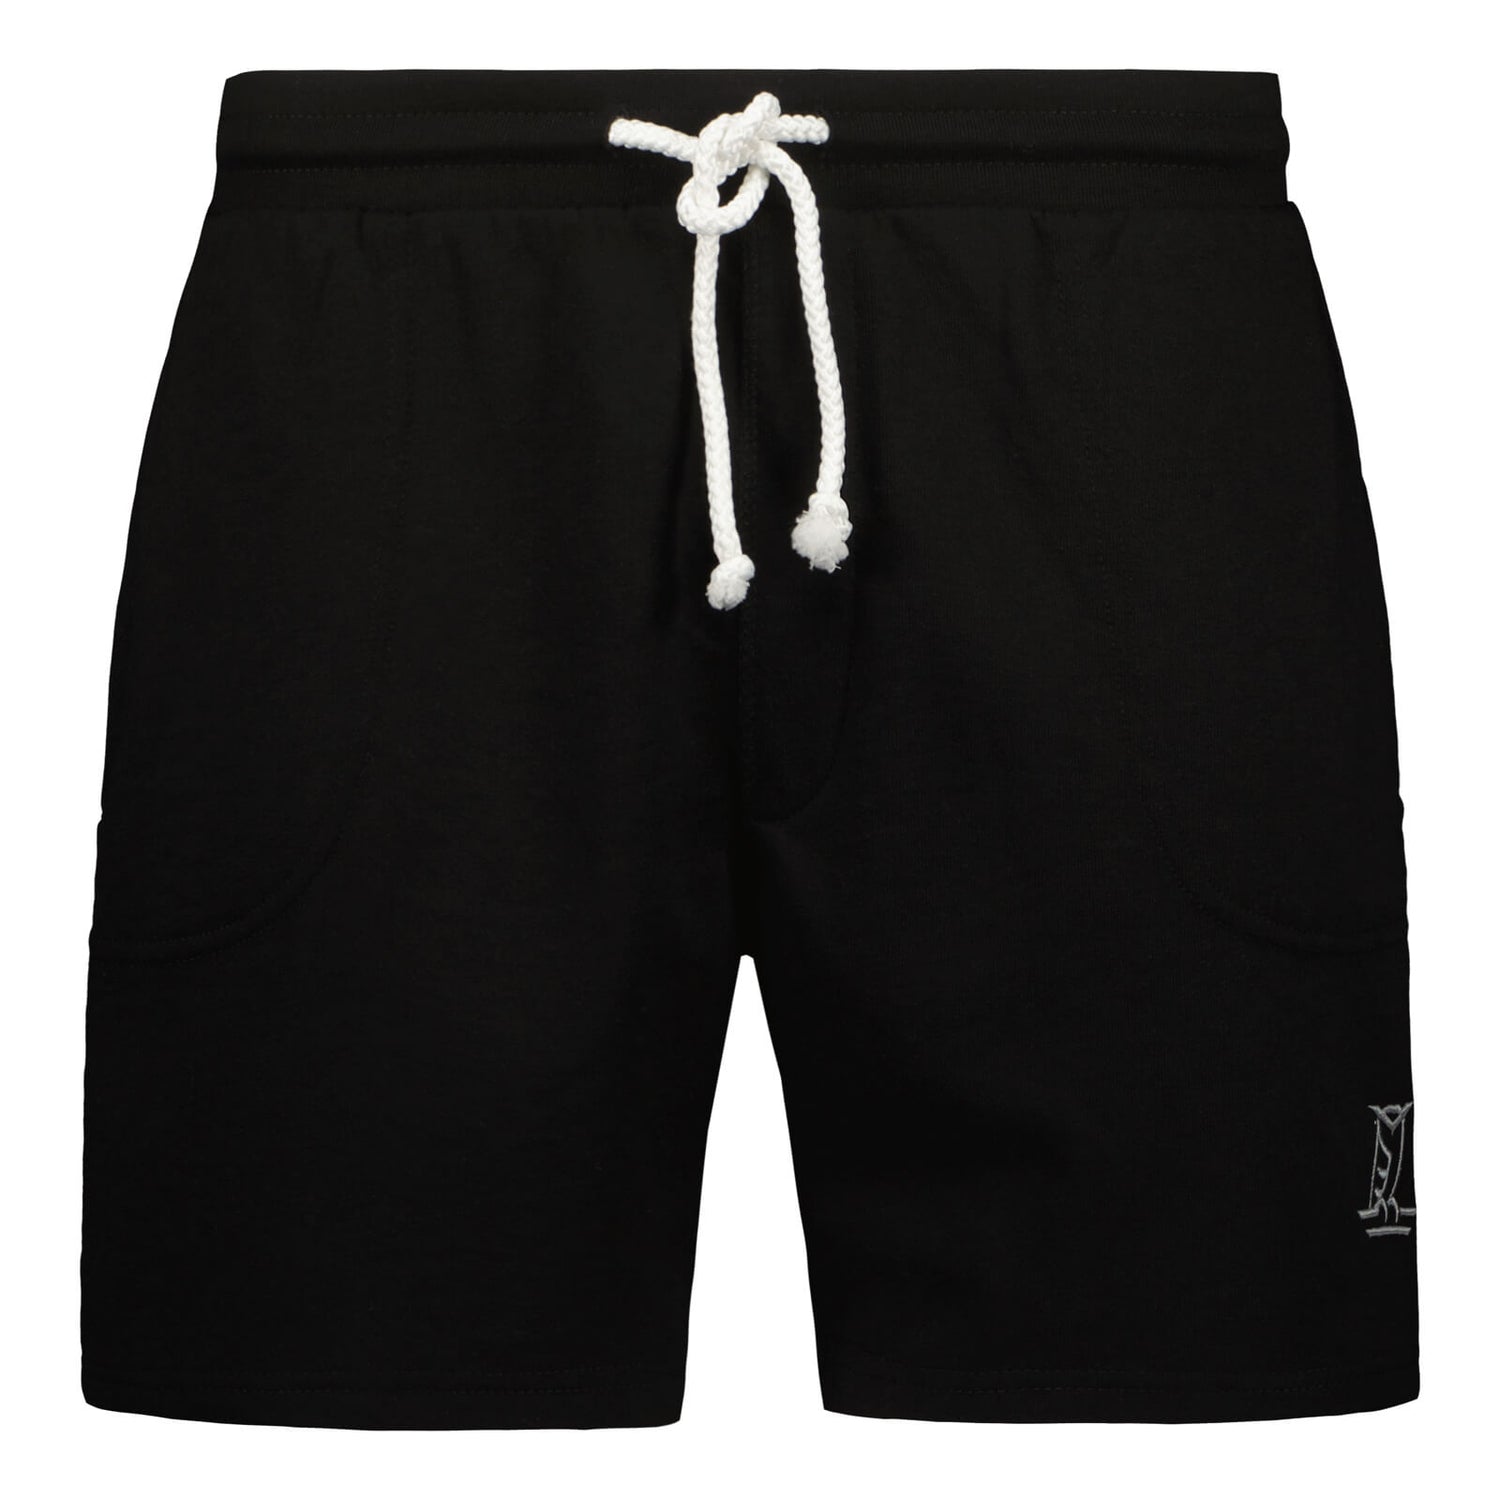 Bubi Miami Shorts, Black